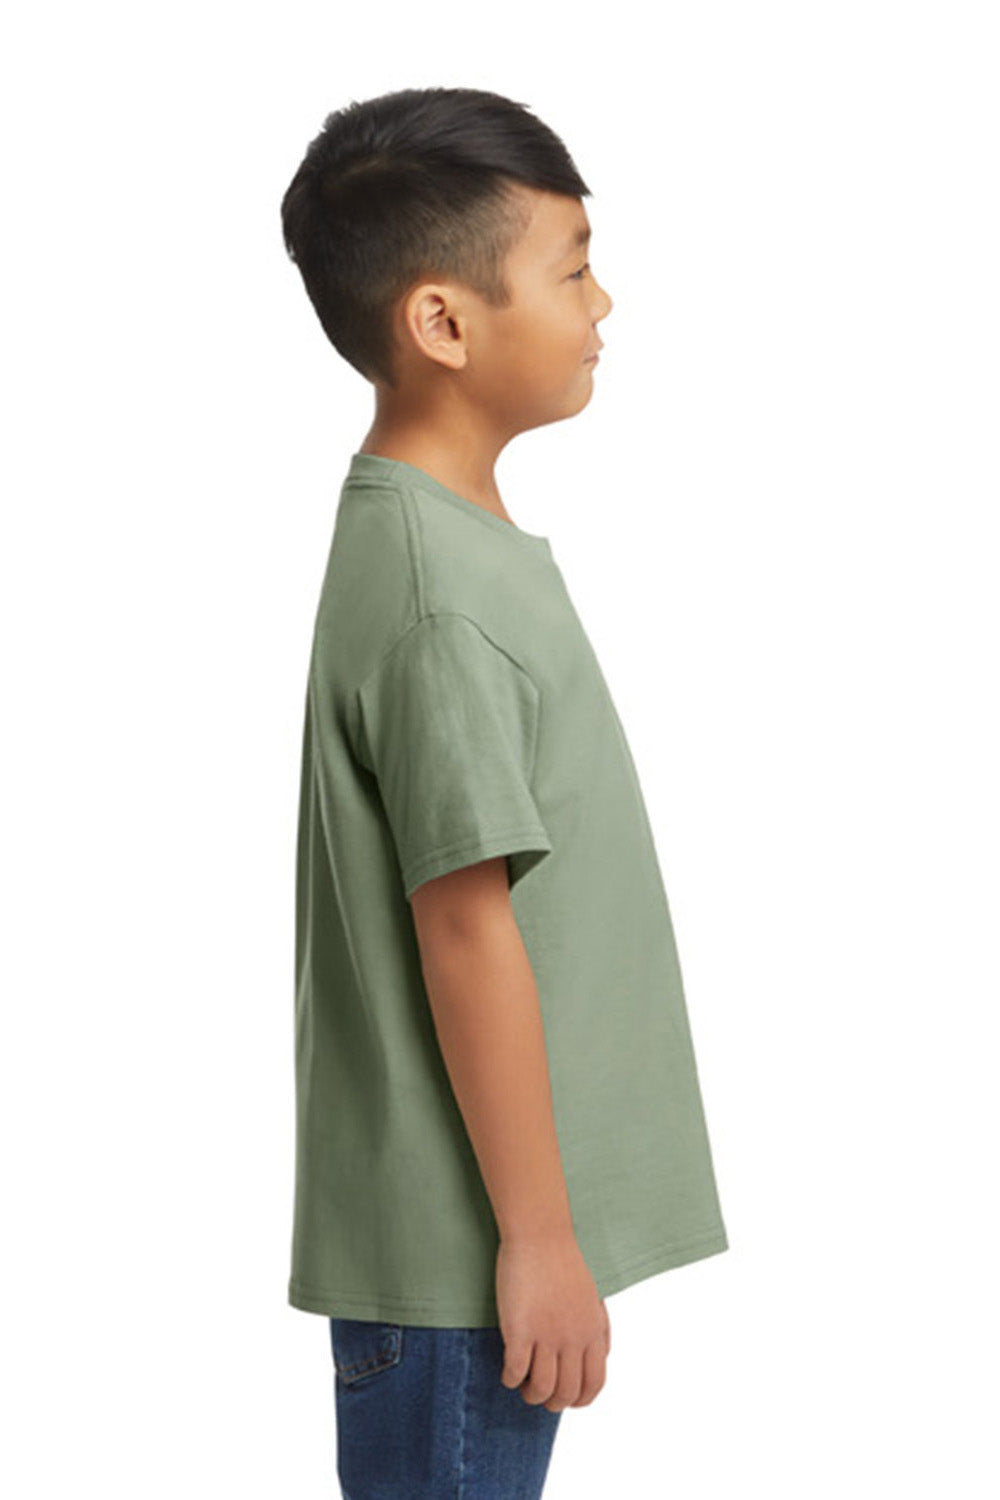 Gildan G650B Youth Softstyle Short Sleeve Crewneck T-Shirt Sage Green Side